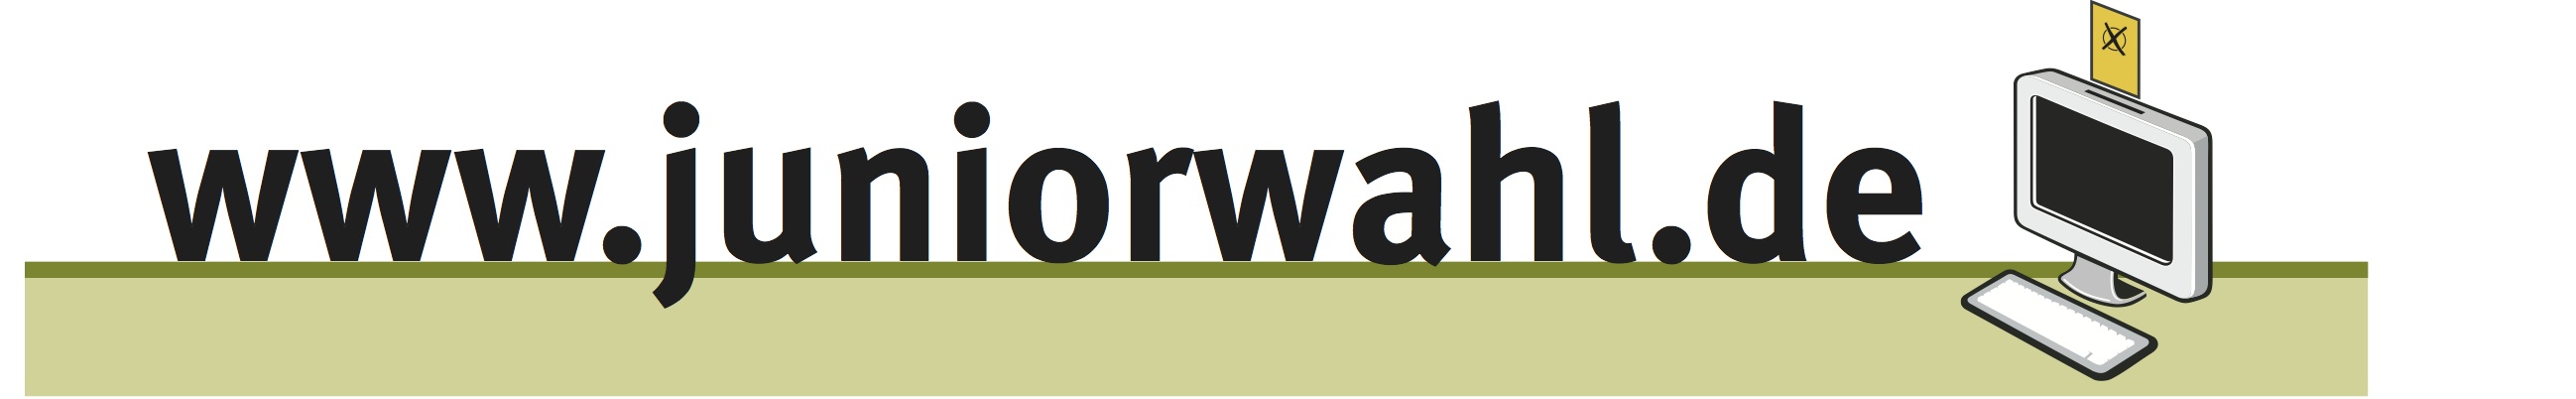 logo juniorwahl